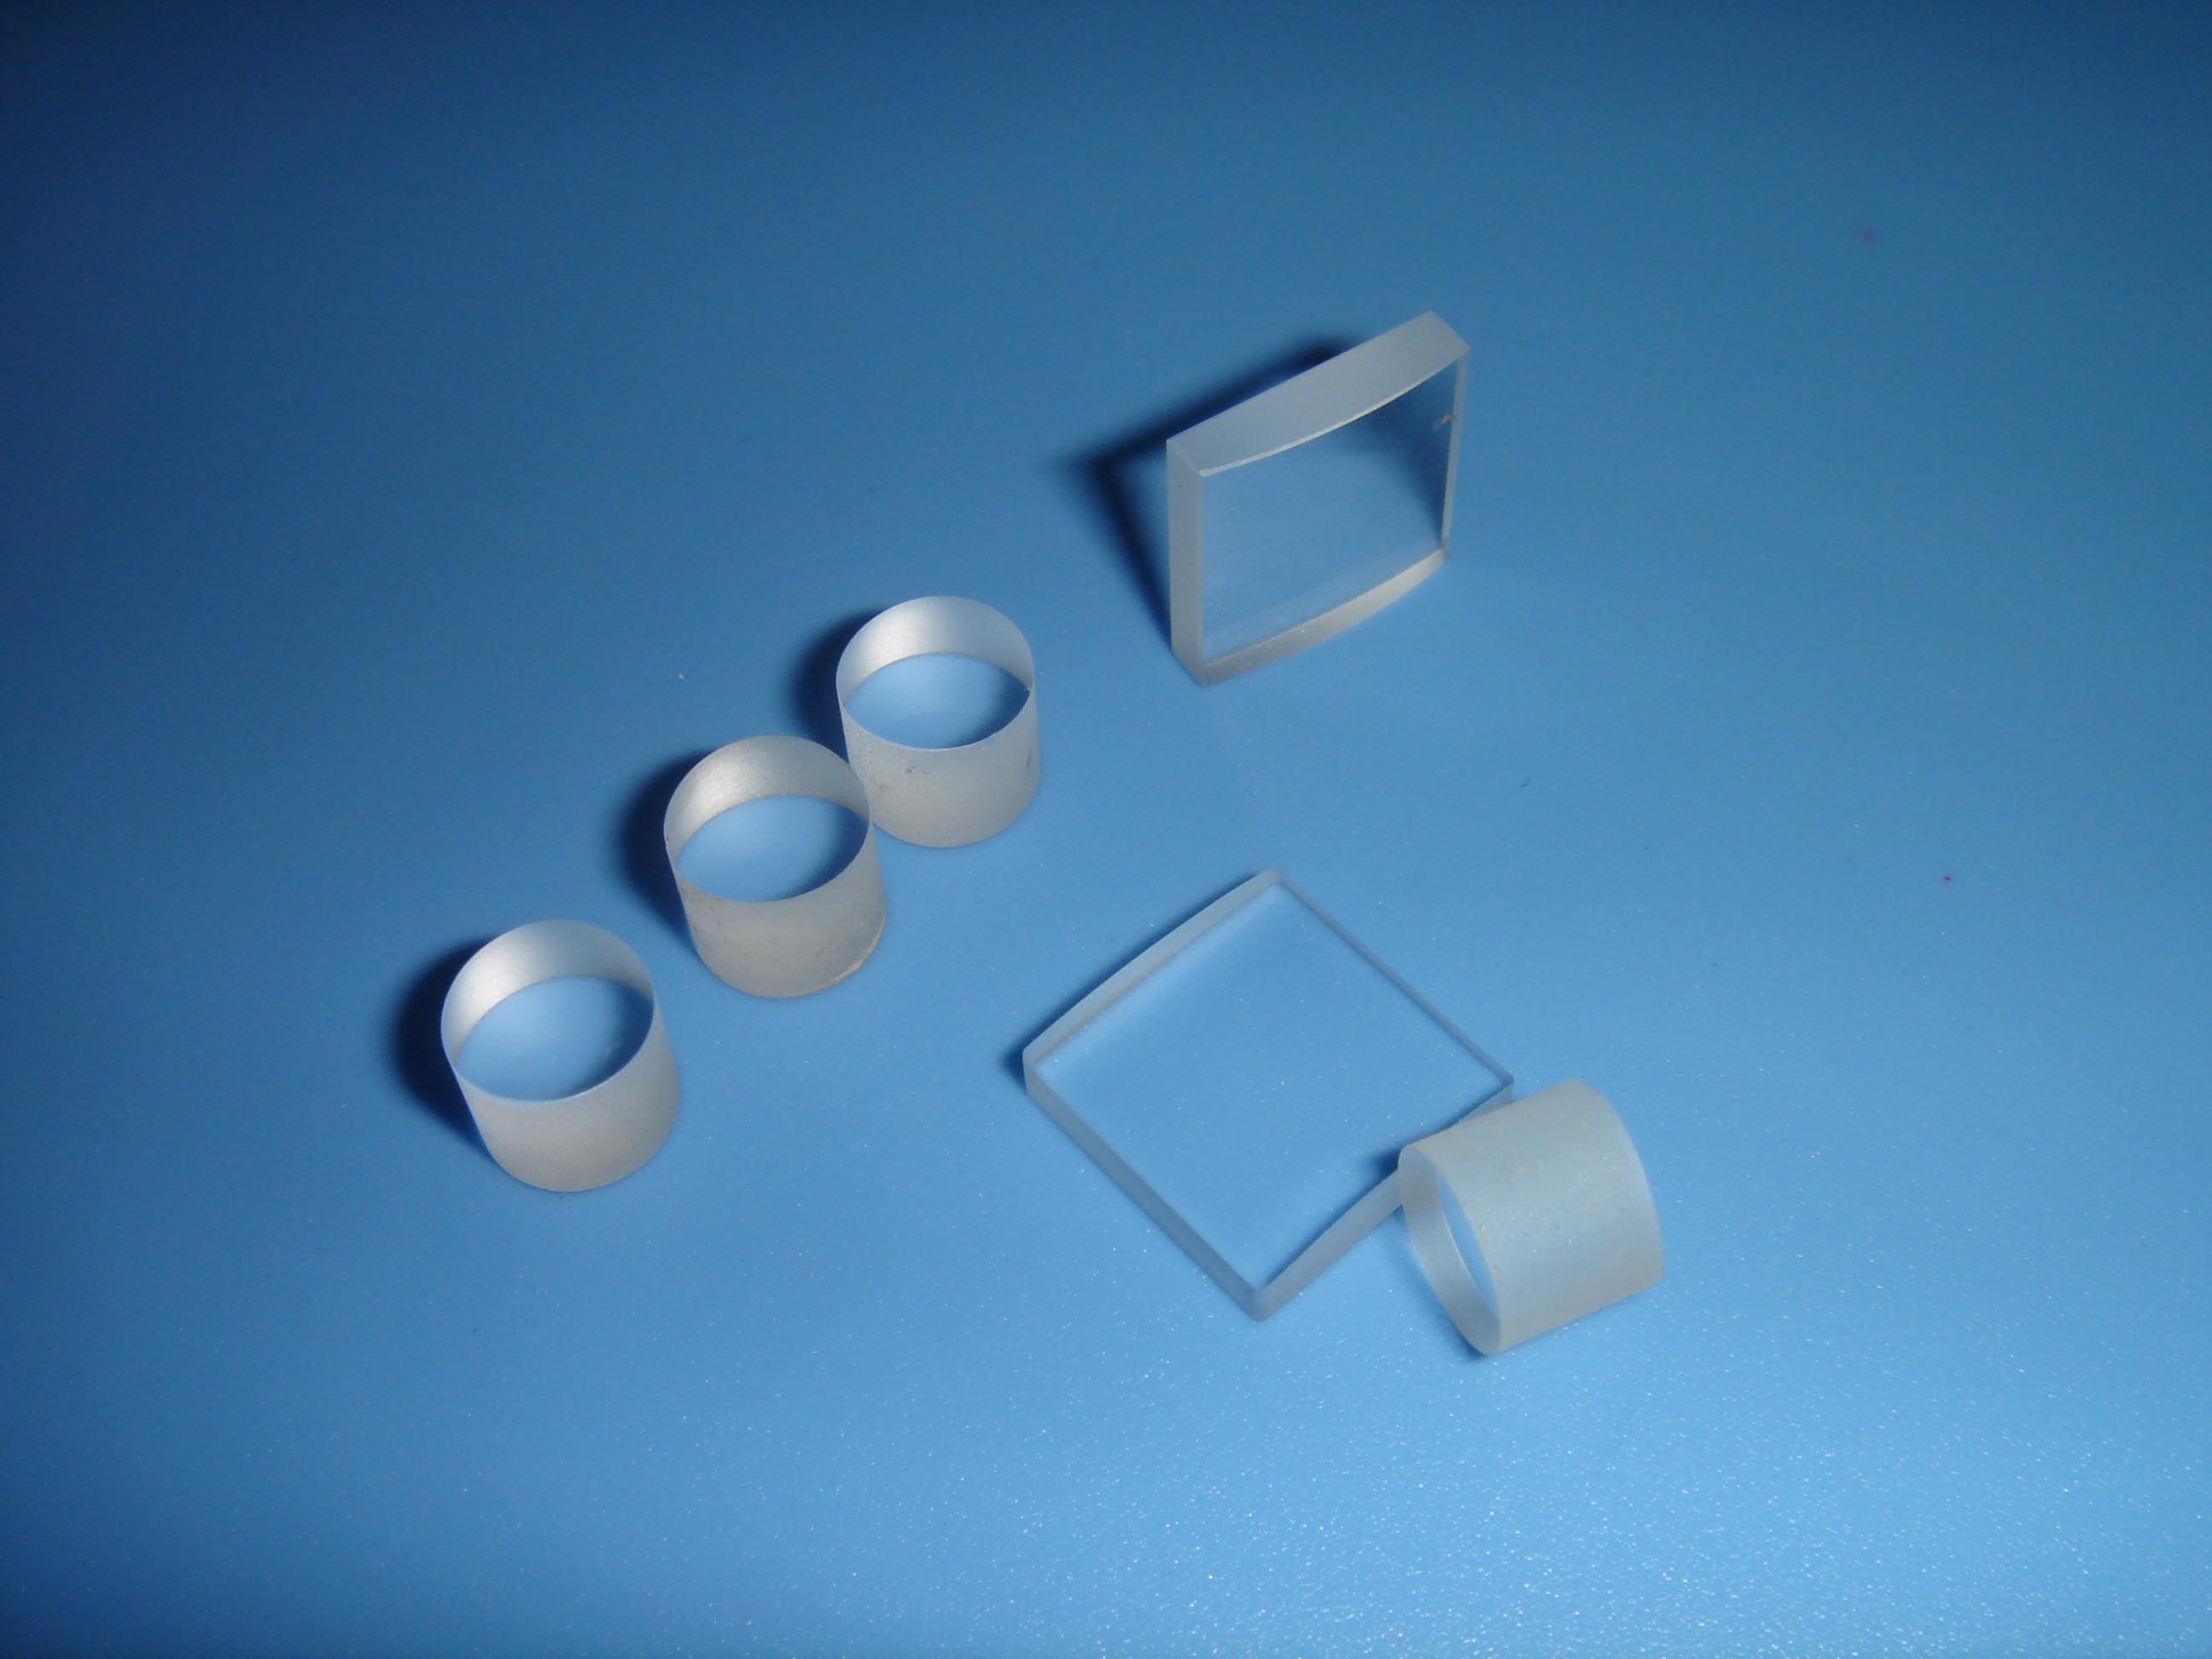 prism/plano-convex cylindrical lenses/cylinder lenses